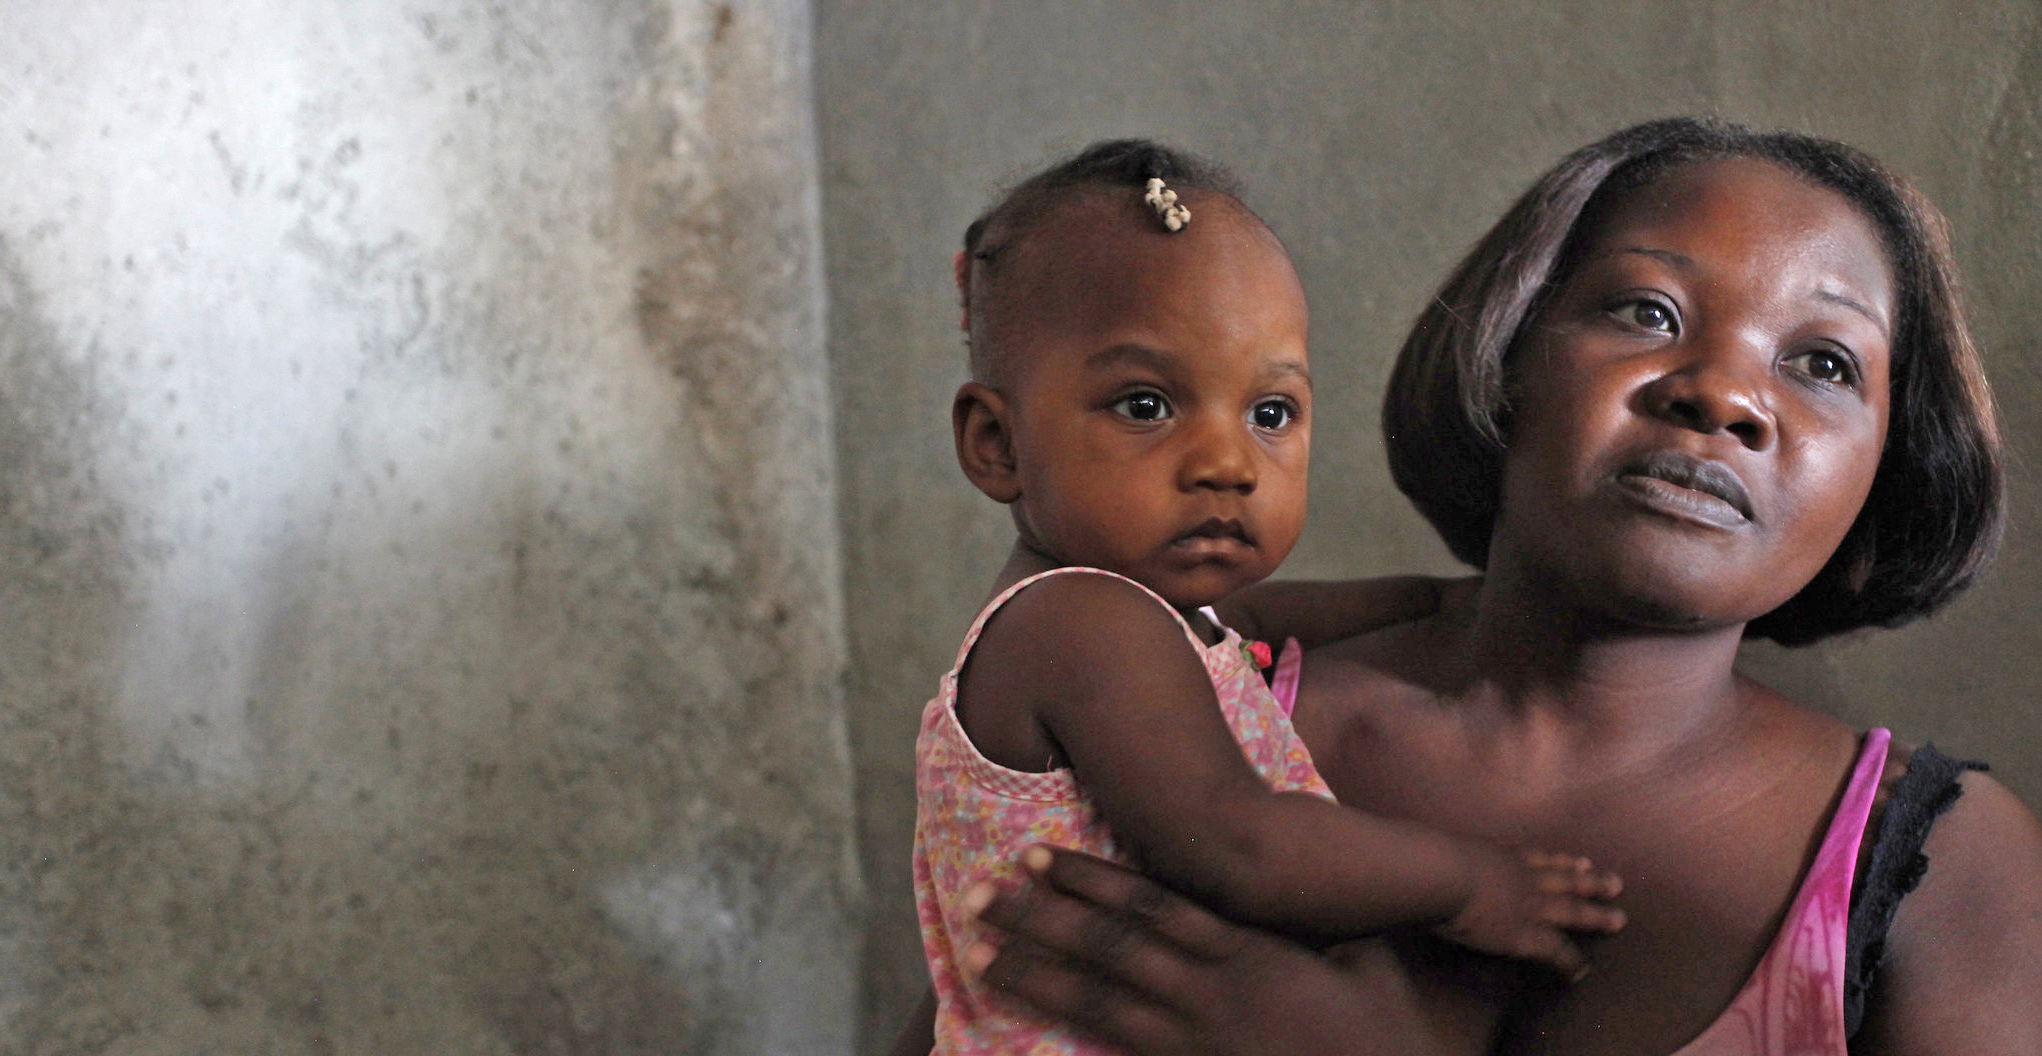 Haiti mother and child